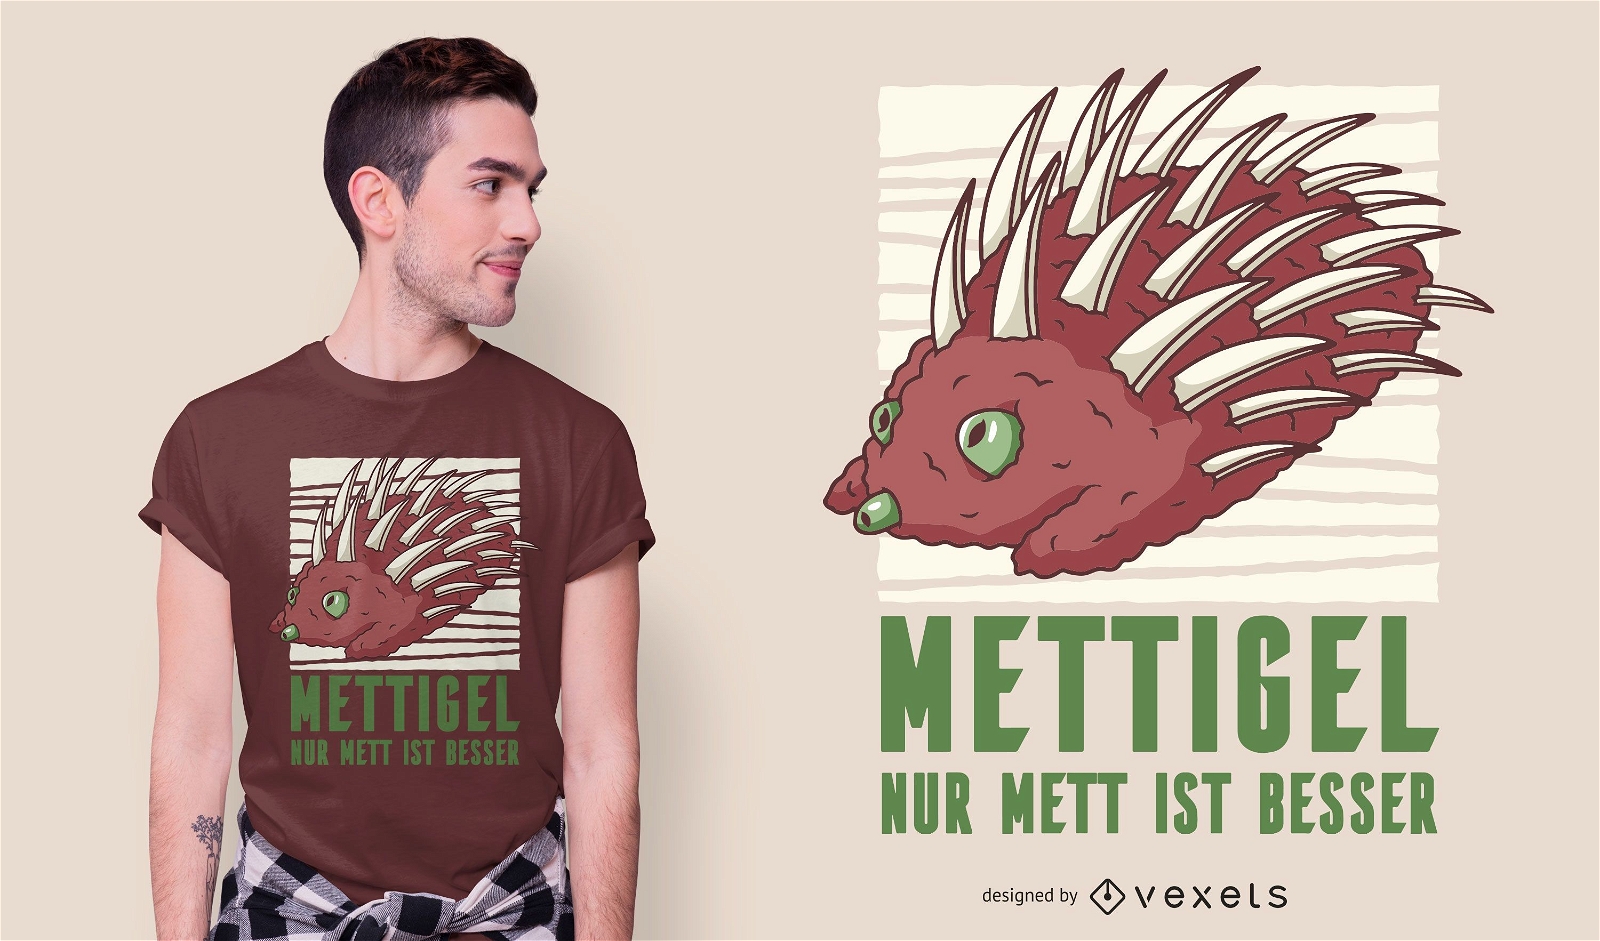 Dise?o de camiseta Mettigel